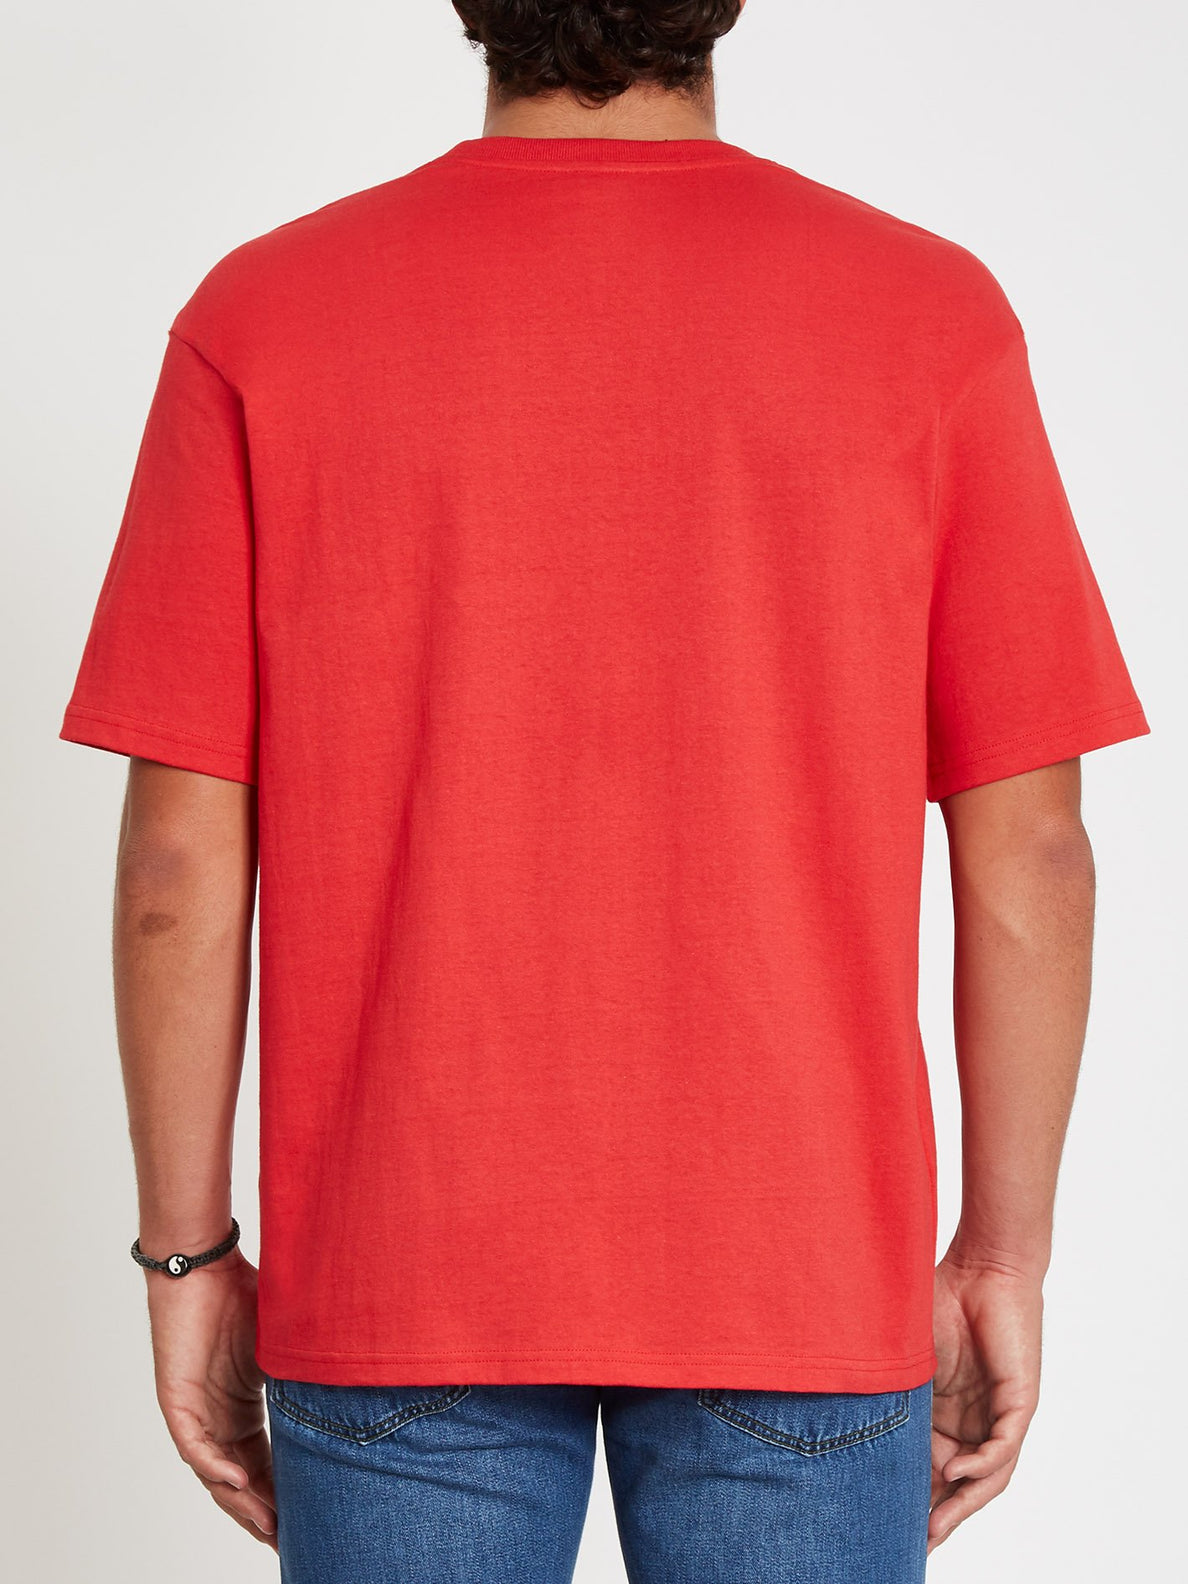 Sick 180 T-shirt - Carmine Red (A4312107_CMR) [B]